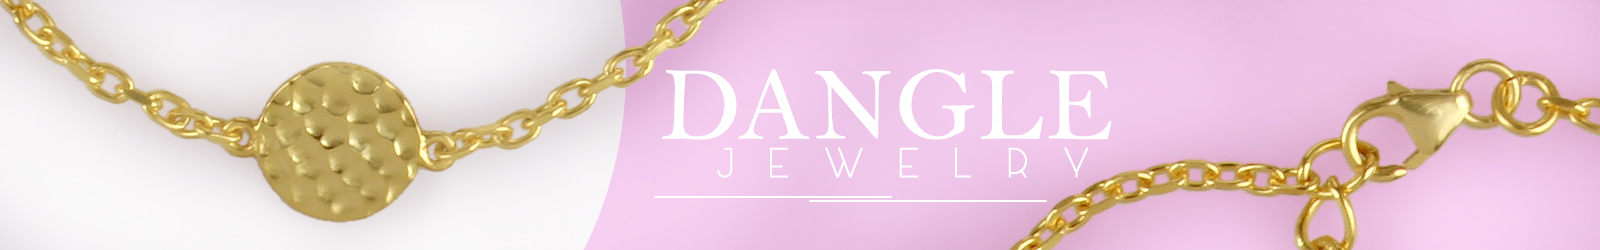 Buy dangle bracelet jewelry at cheap price